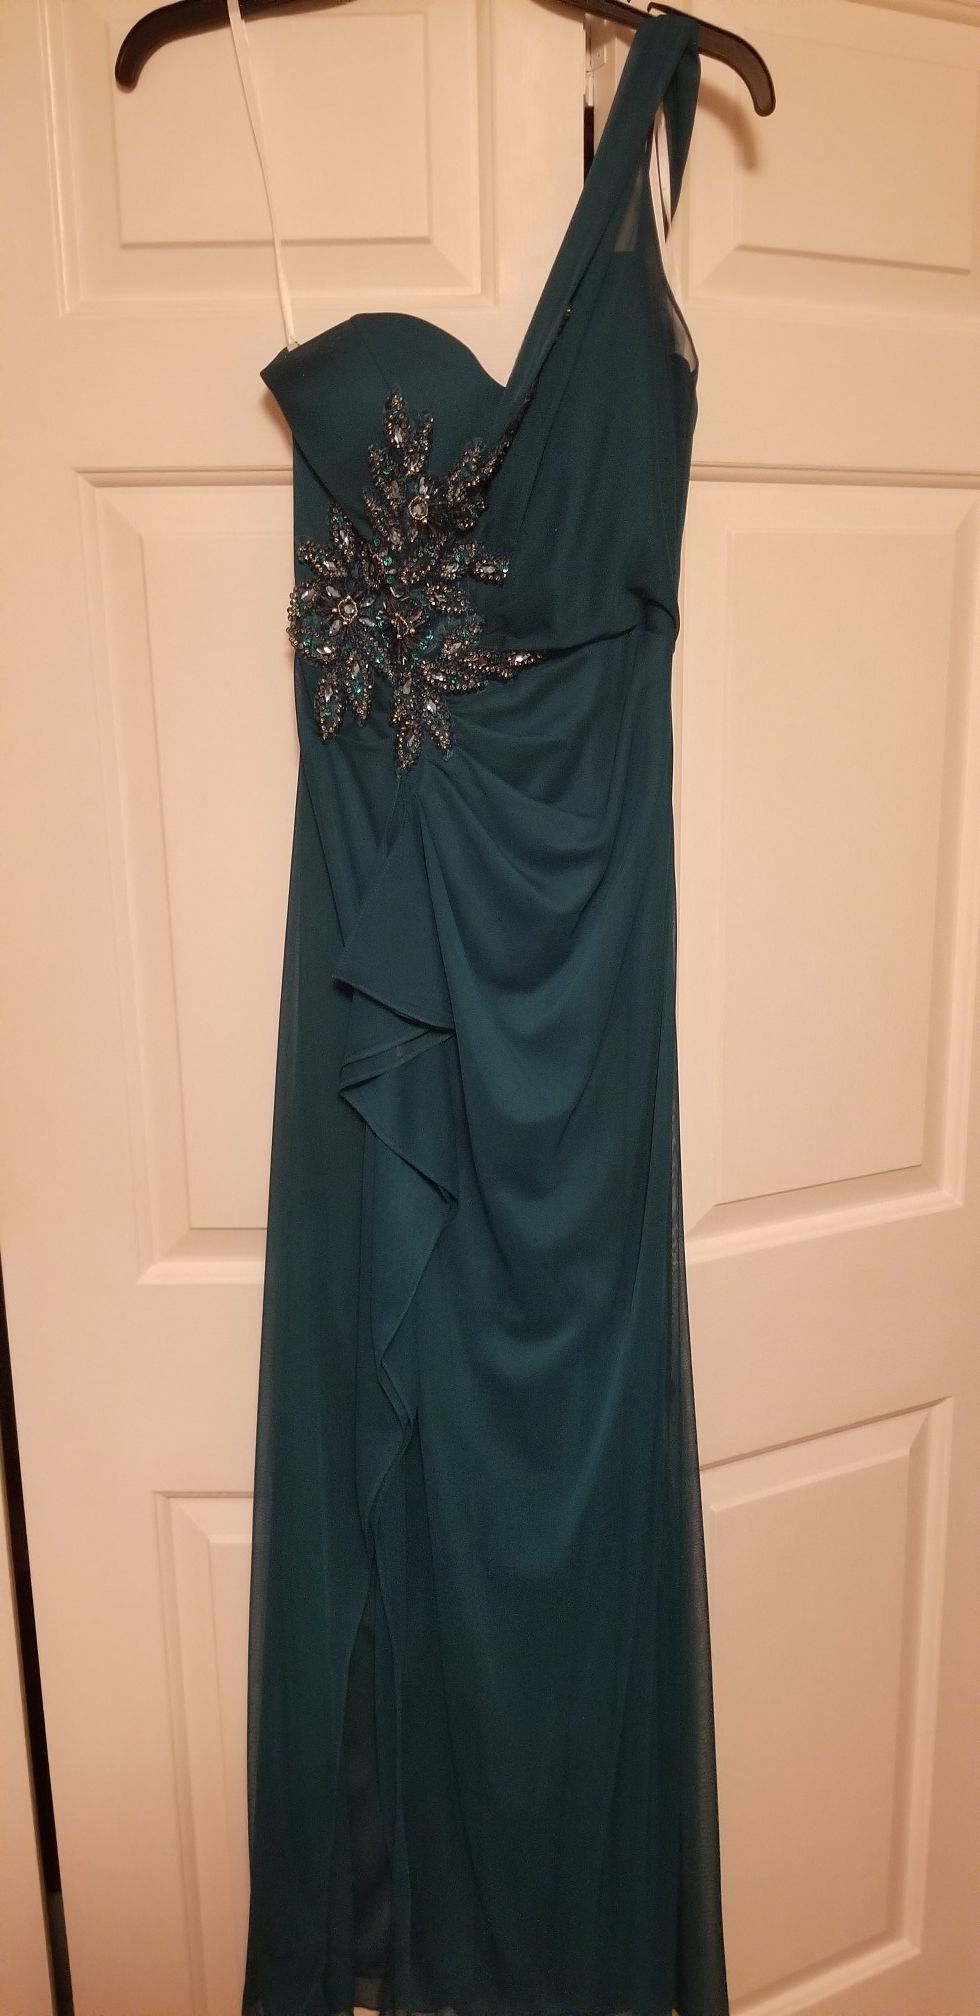 Bridesmaid/prom dress